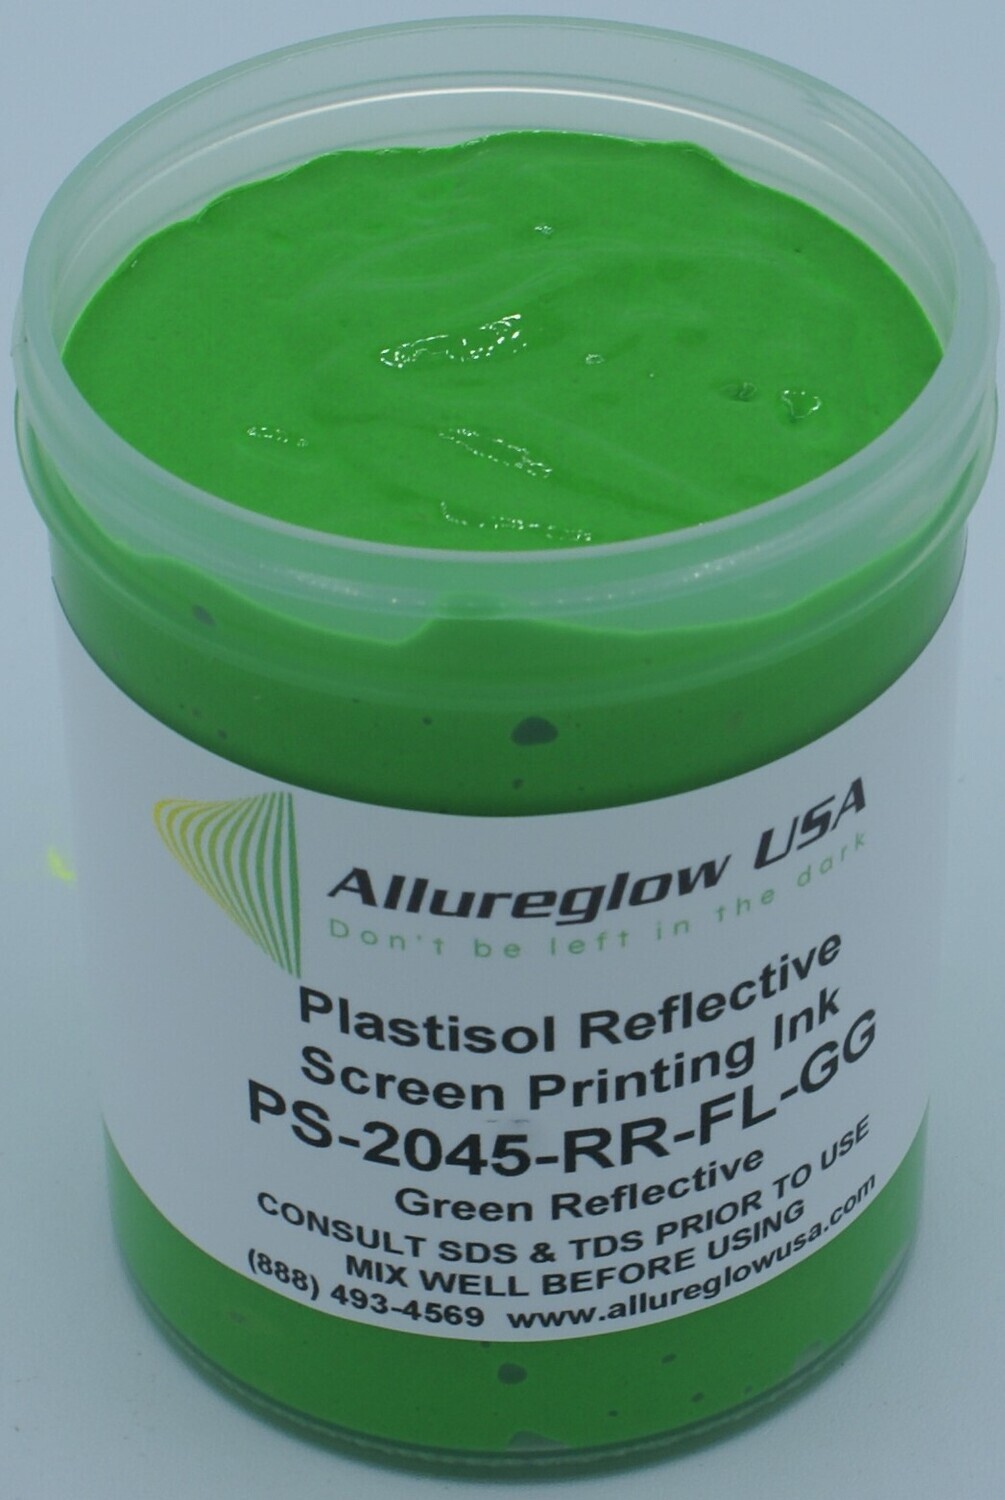 PS-2045-RR-FL-GG-QT  PLASTISOL FLUORESCENT GREEN REFLECTIVE INK QUART